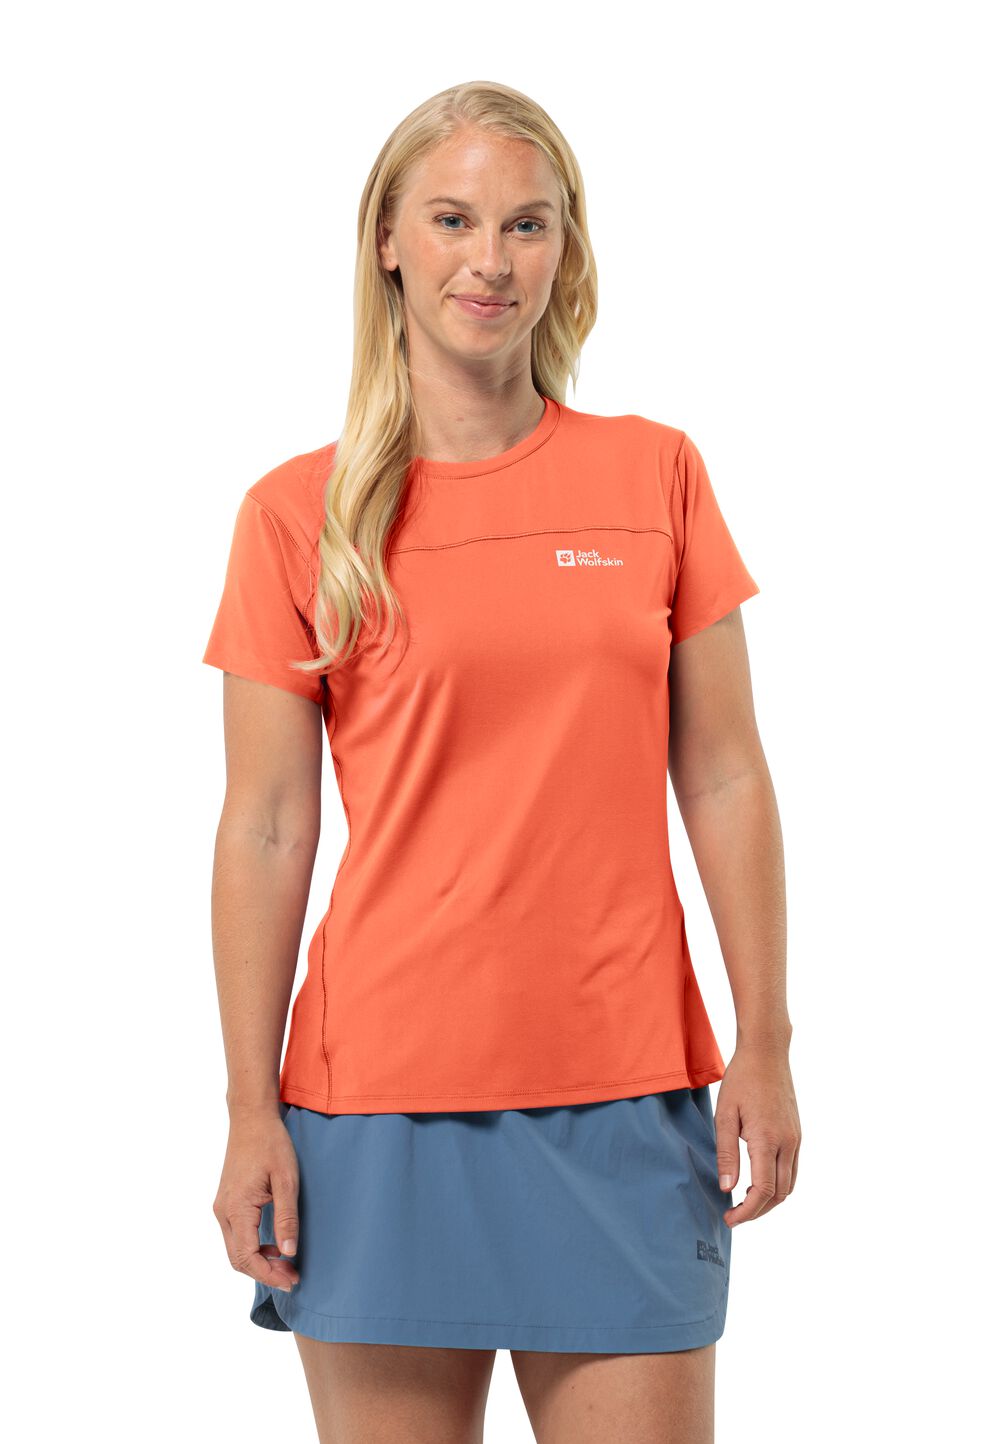 Jack Wolfskin Prelight Chill T-Shirt Women Functioneel shirt Dames L rood digital orange